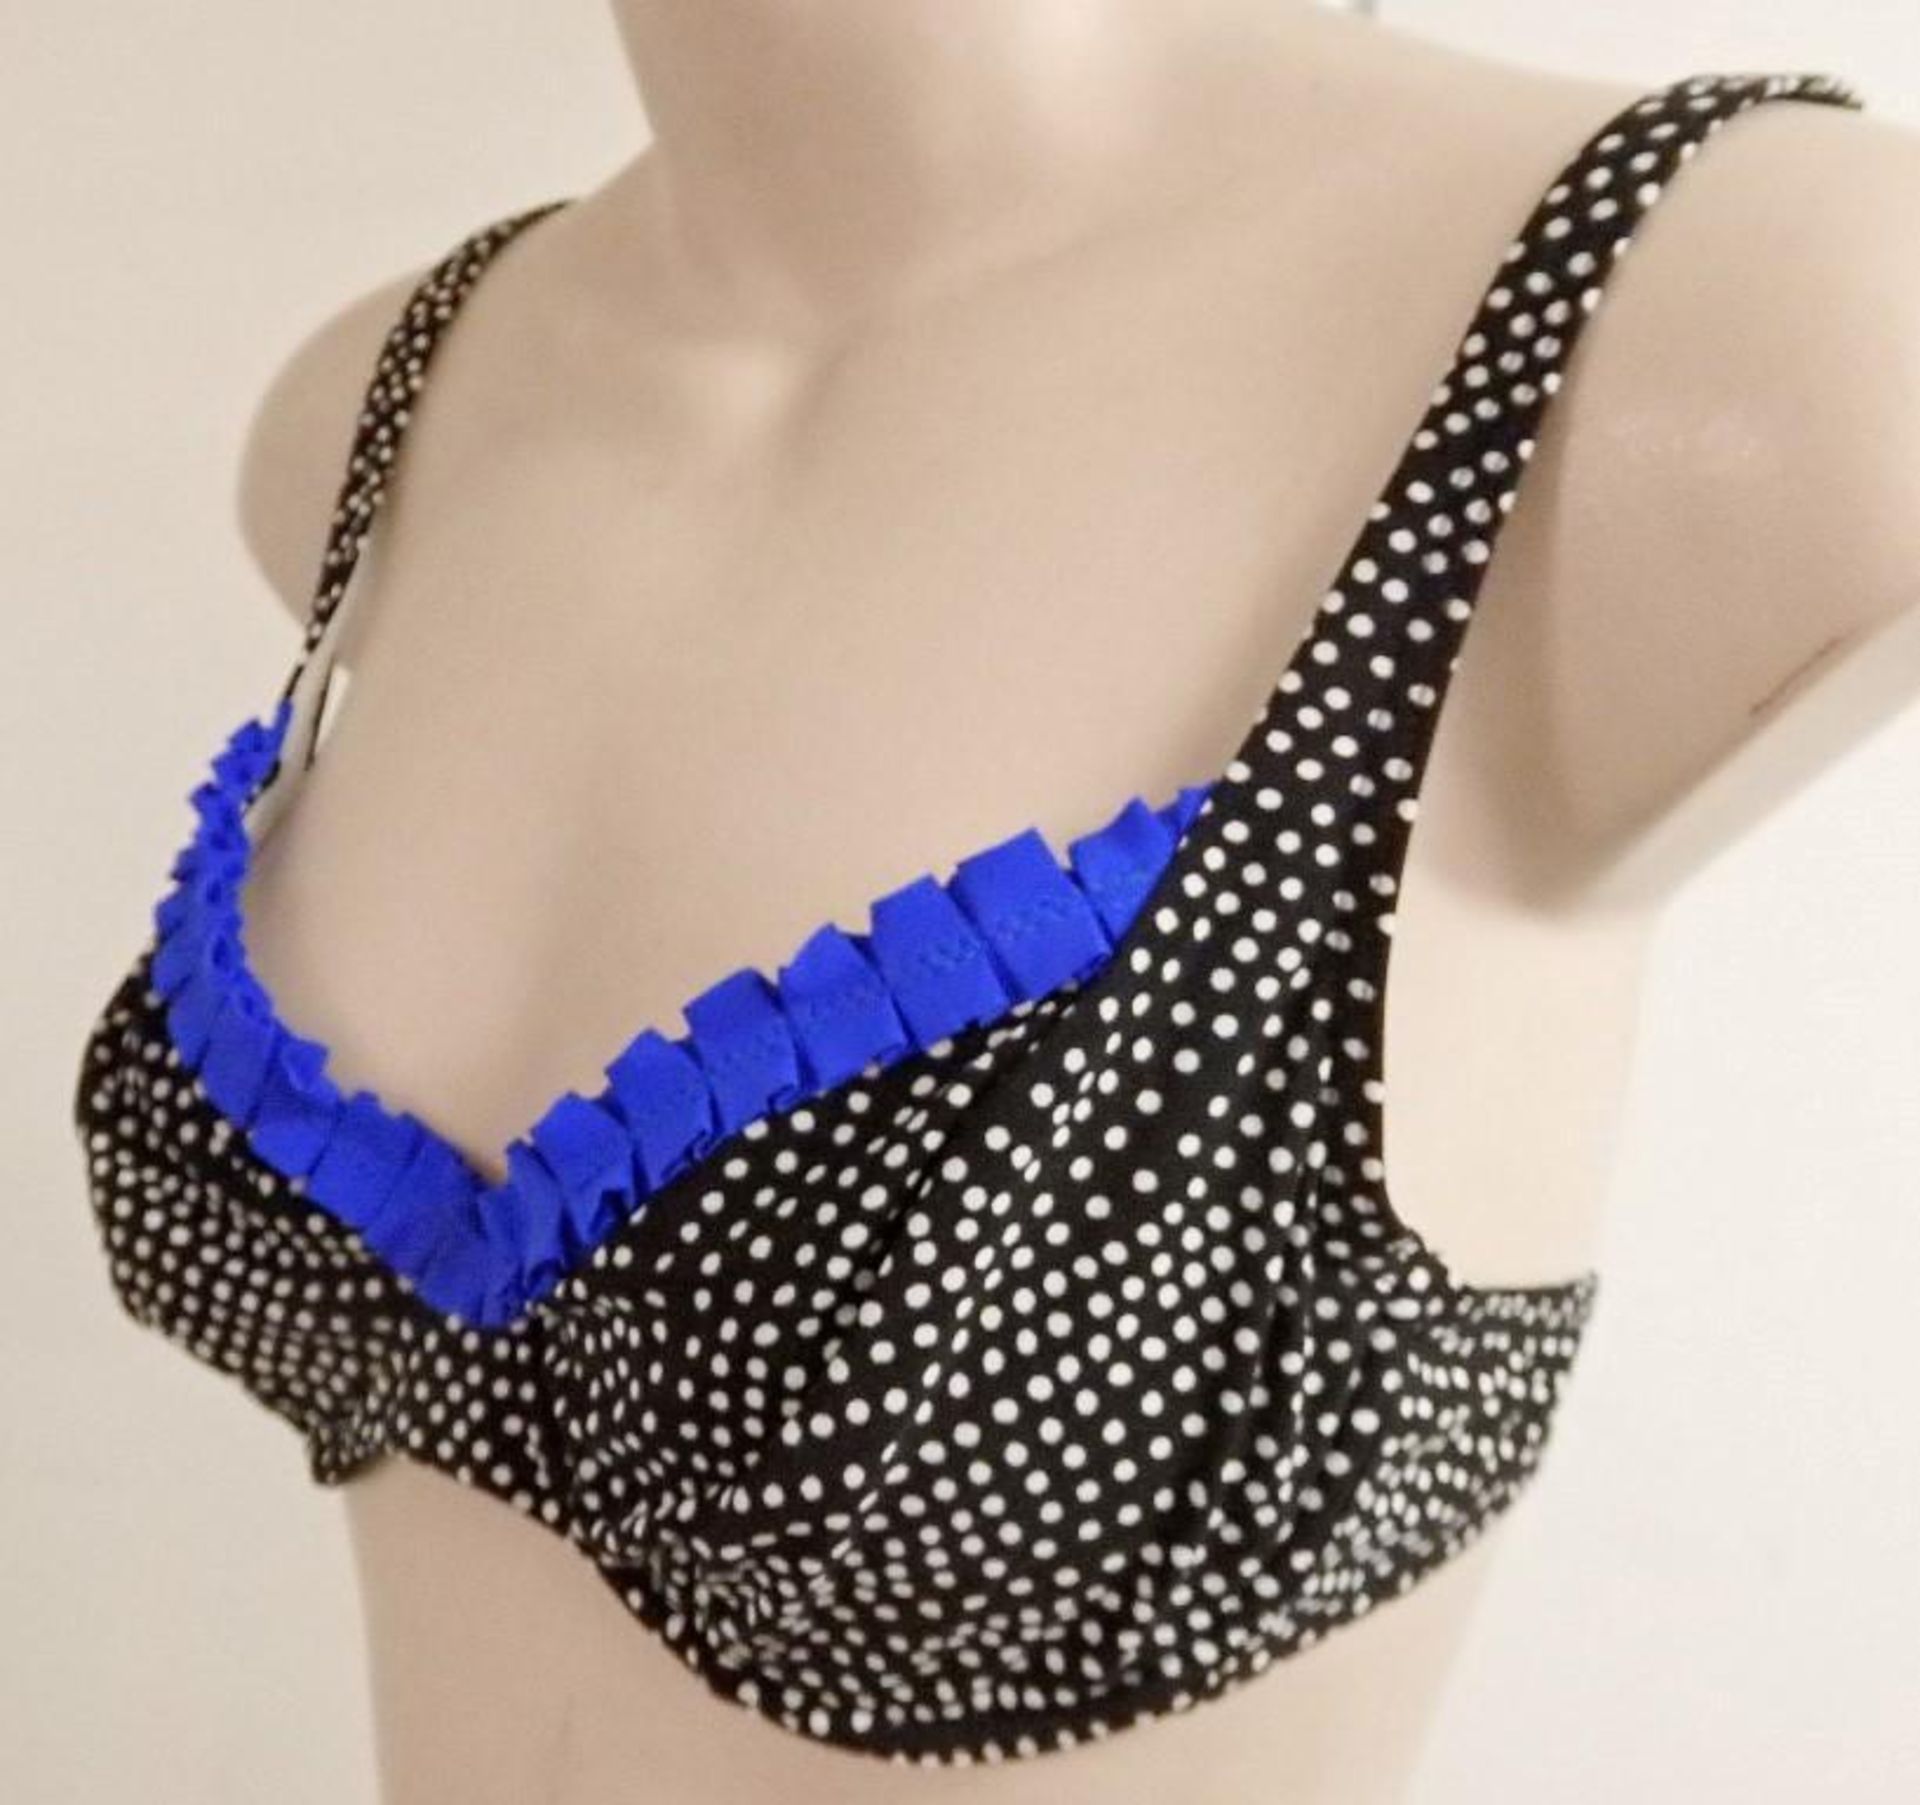 1 x Rasurel - Black Polka dot with royal blue trim &frill Tobago Bikini - B21068 - Size 2C - UK 32 - - Image 6 of 10